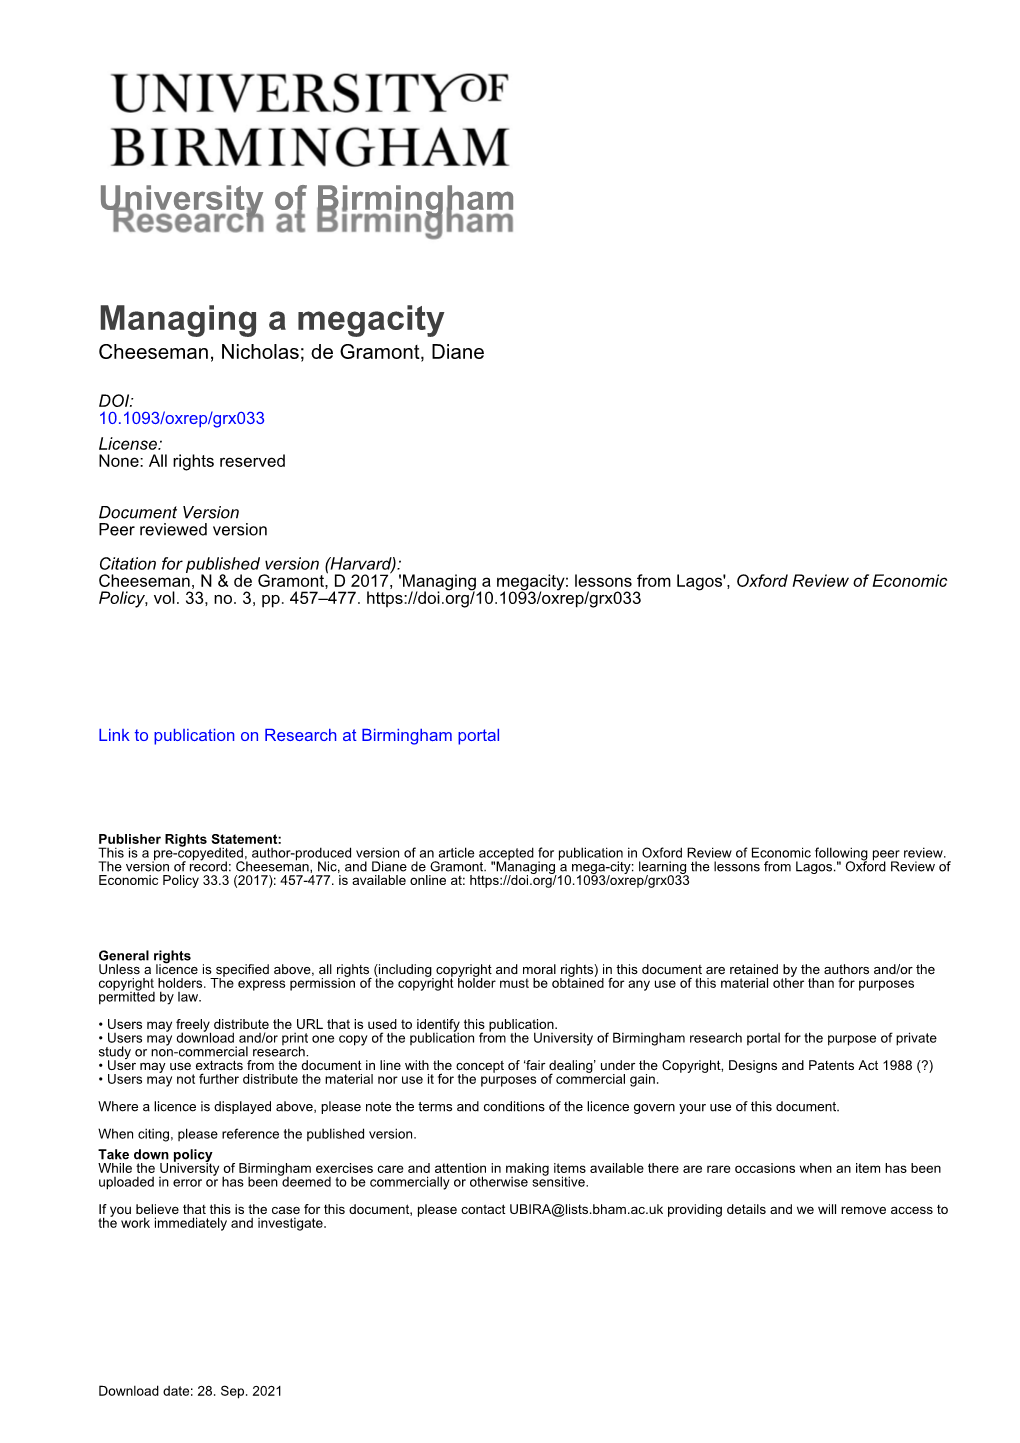 University of Birmingham Managing a Megacity